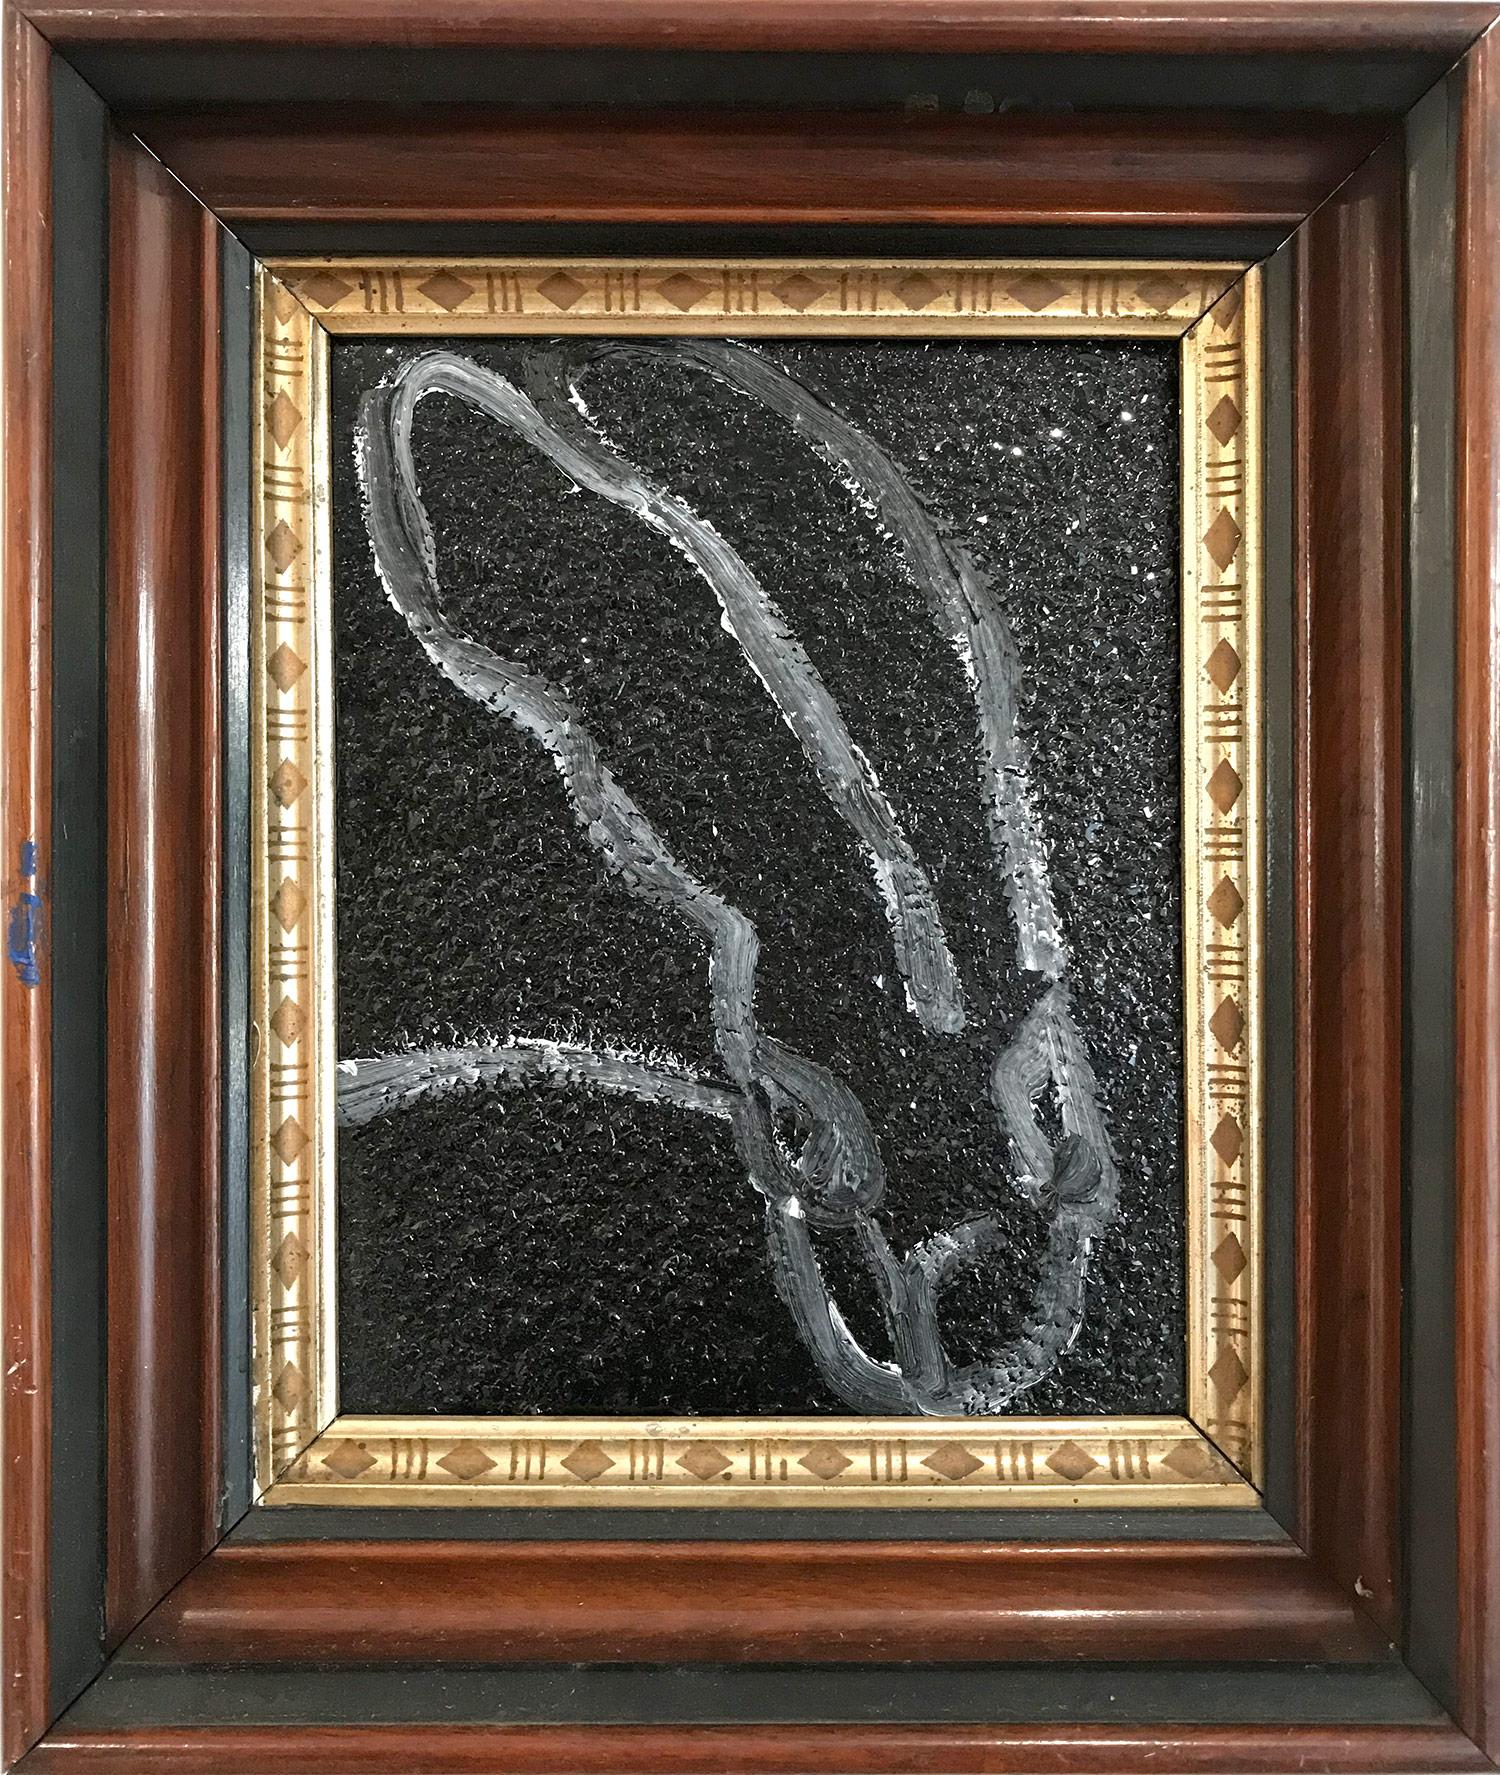 Hunt Slonem Abstract Painting - "Marnie" (Bunny on Black Diamond Dust) Oil Mixed Media Painting on Wood Panel